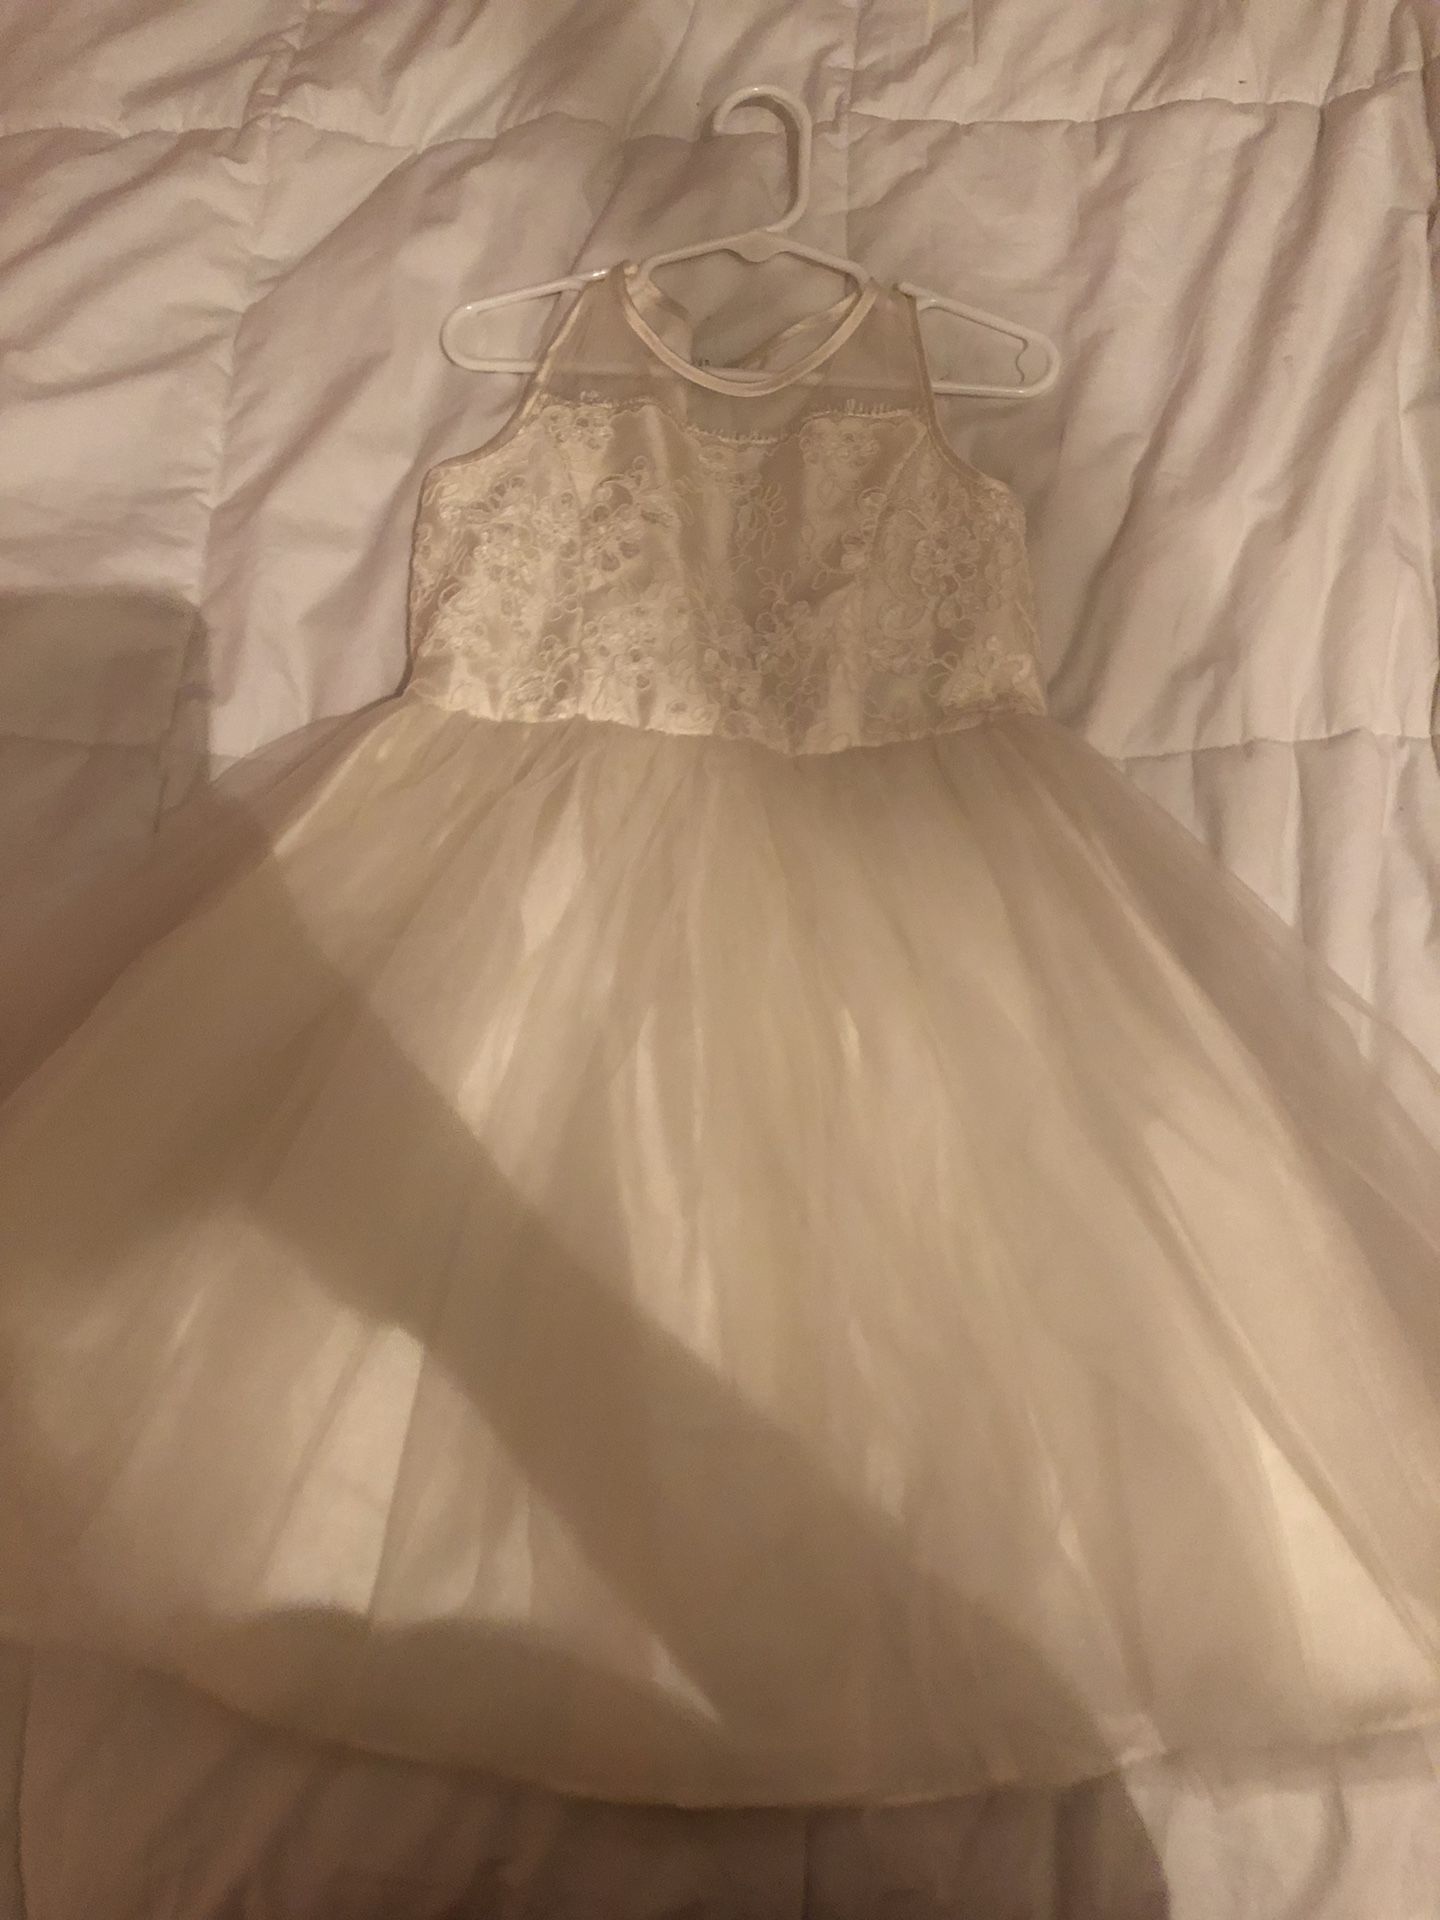 Flower girl/communion dress size 6